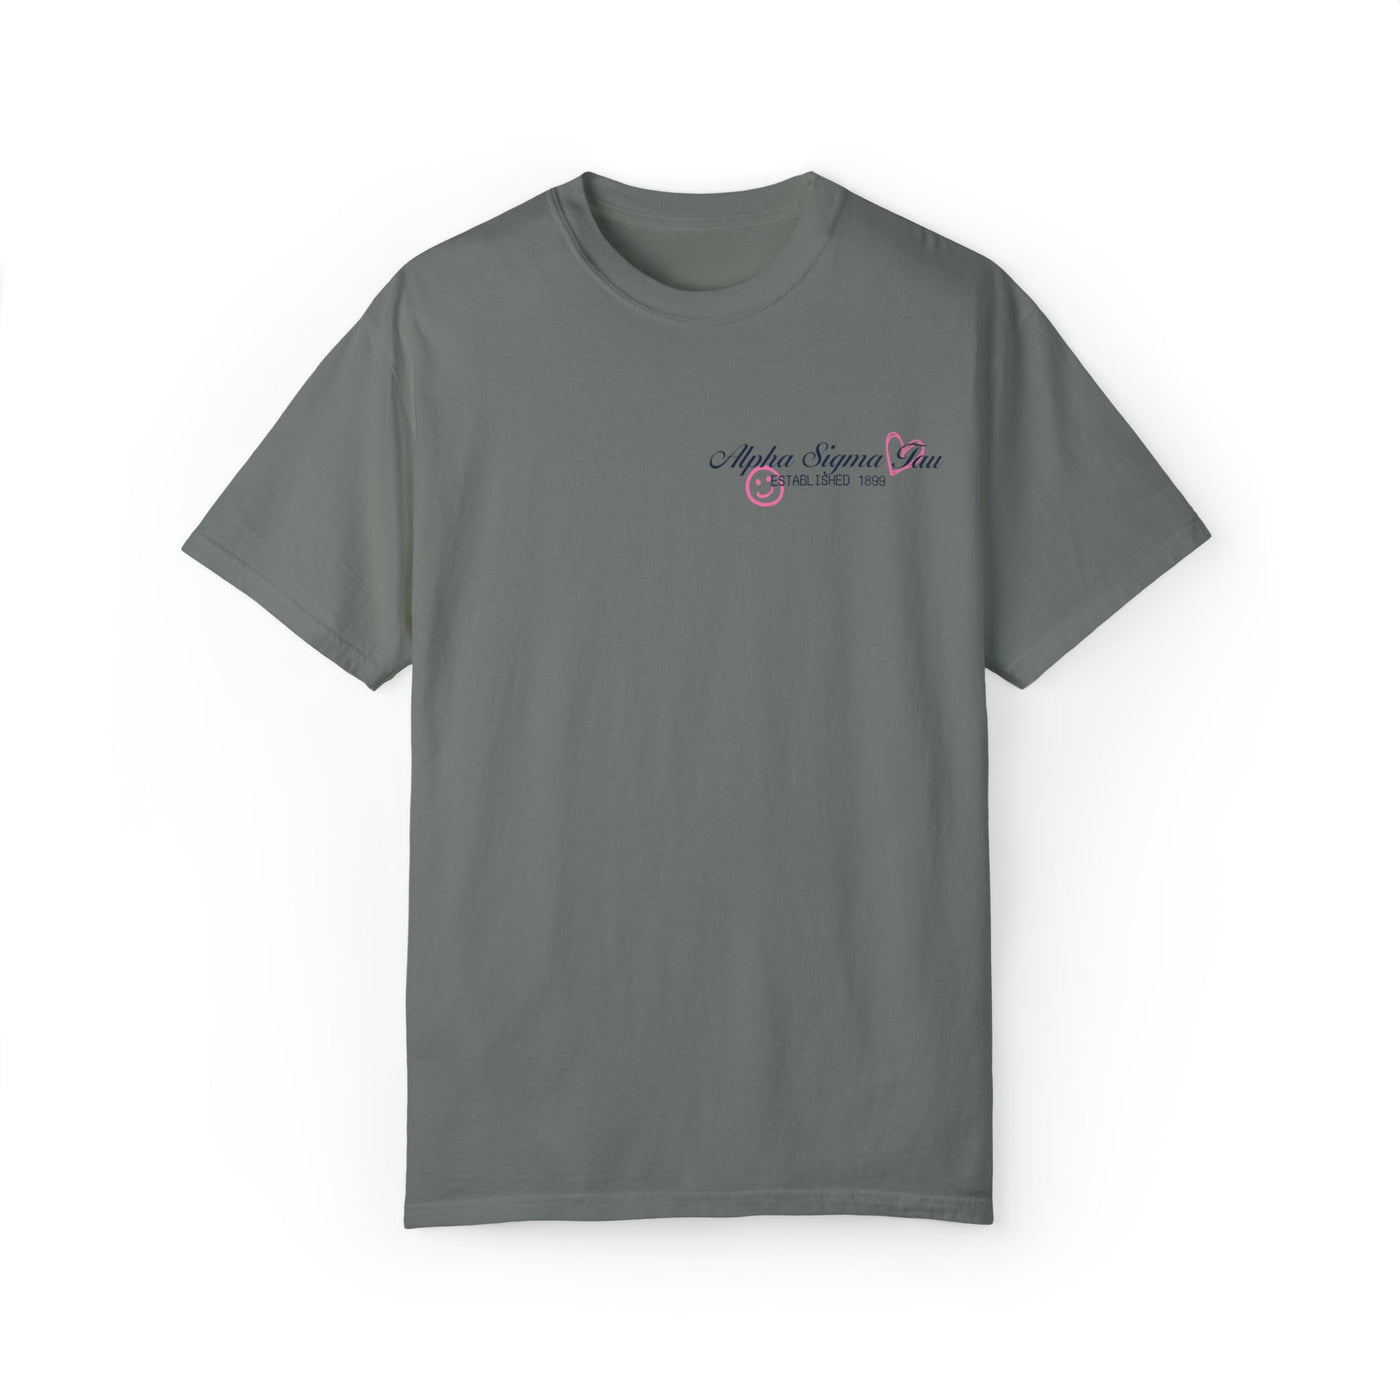 Alpha Sigma Tau Sorority Receipt Comfy T-shirt